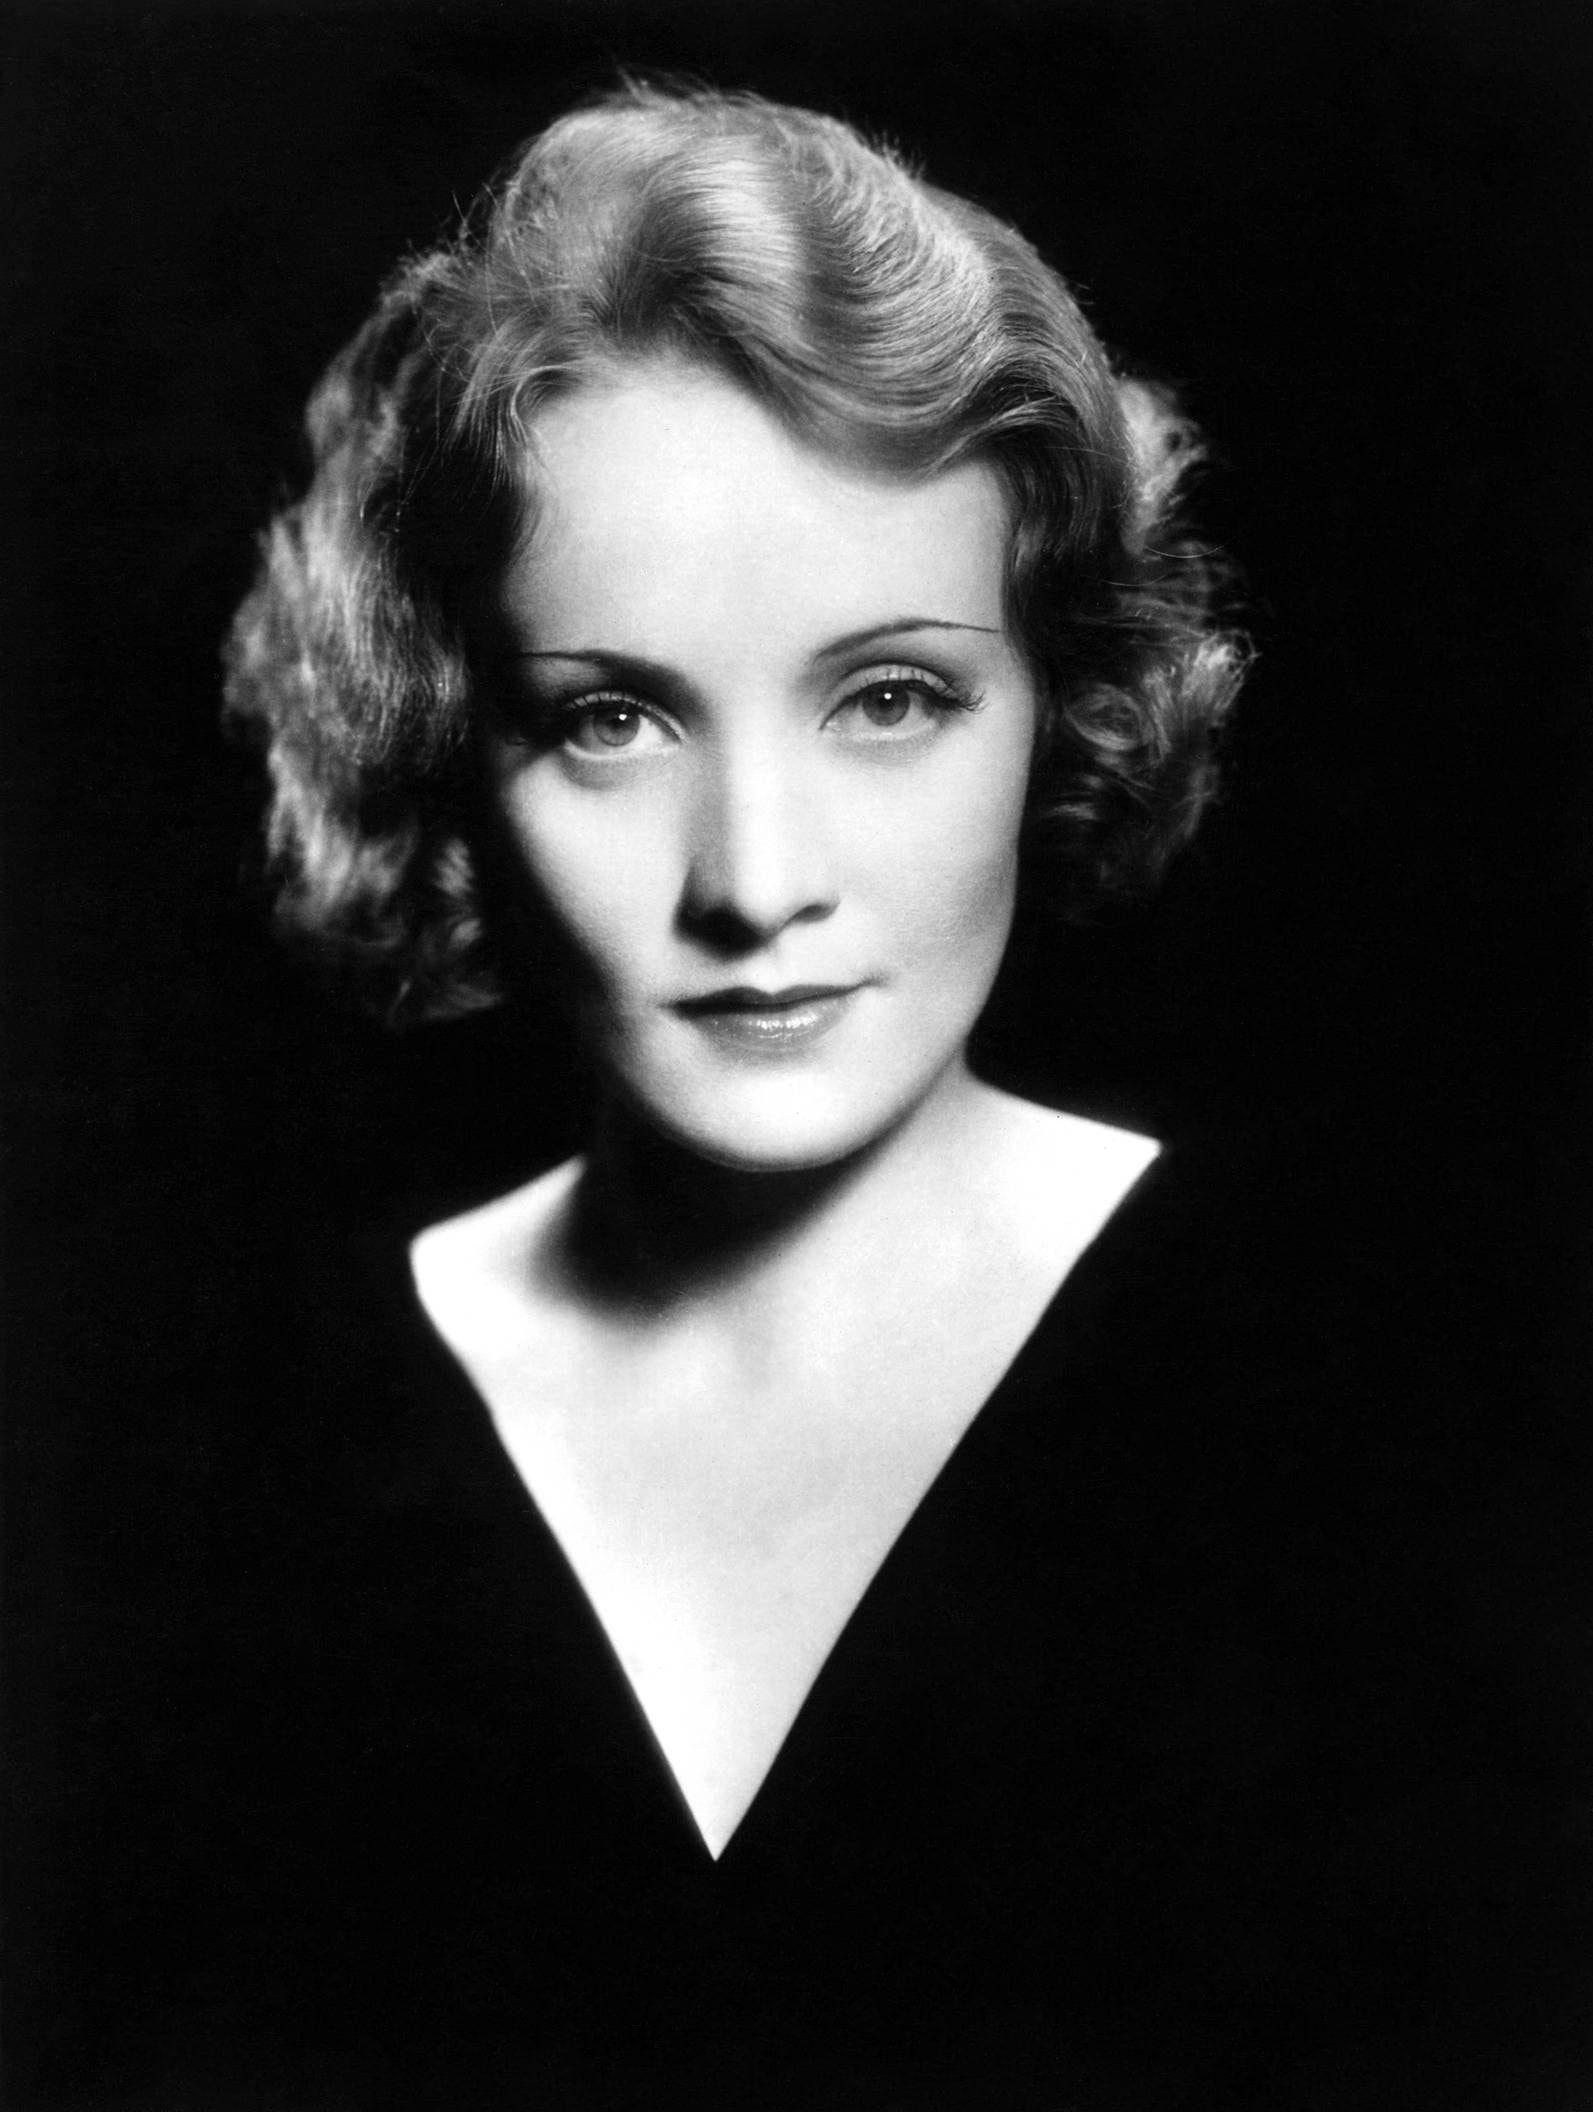 Marlene Dietrich Wallpapers - Top Free Marlene Dietrich Backgrounds ...